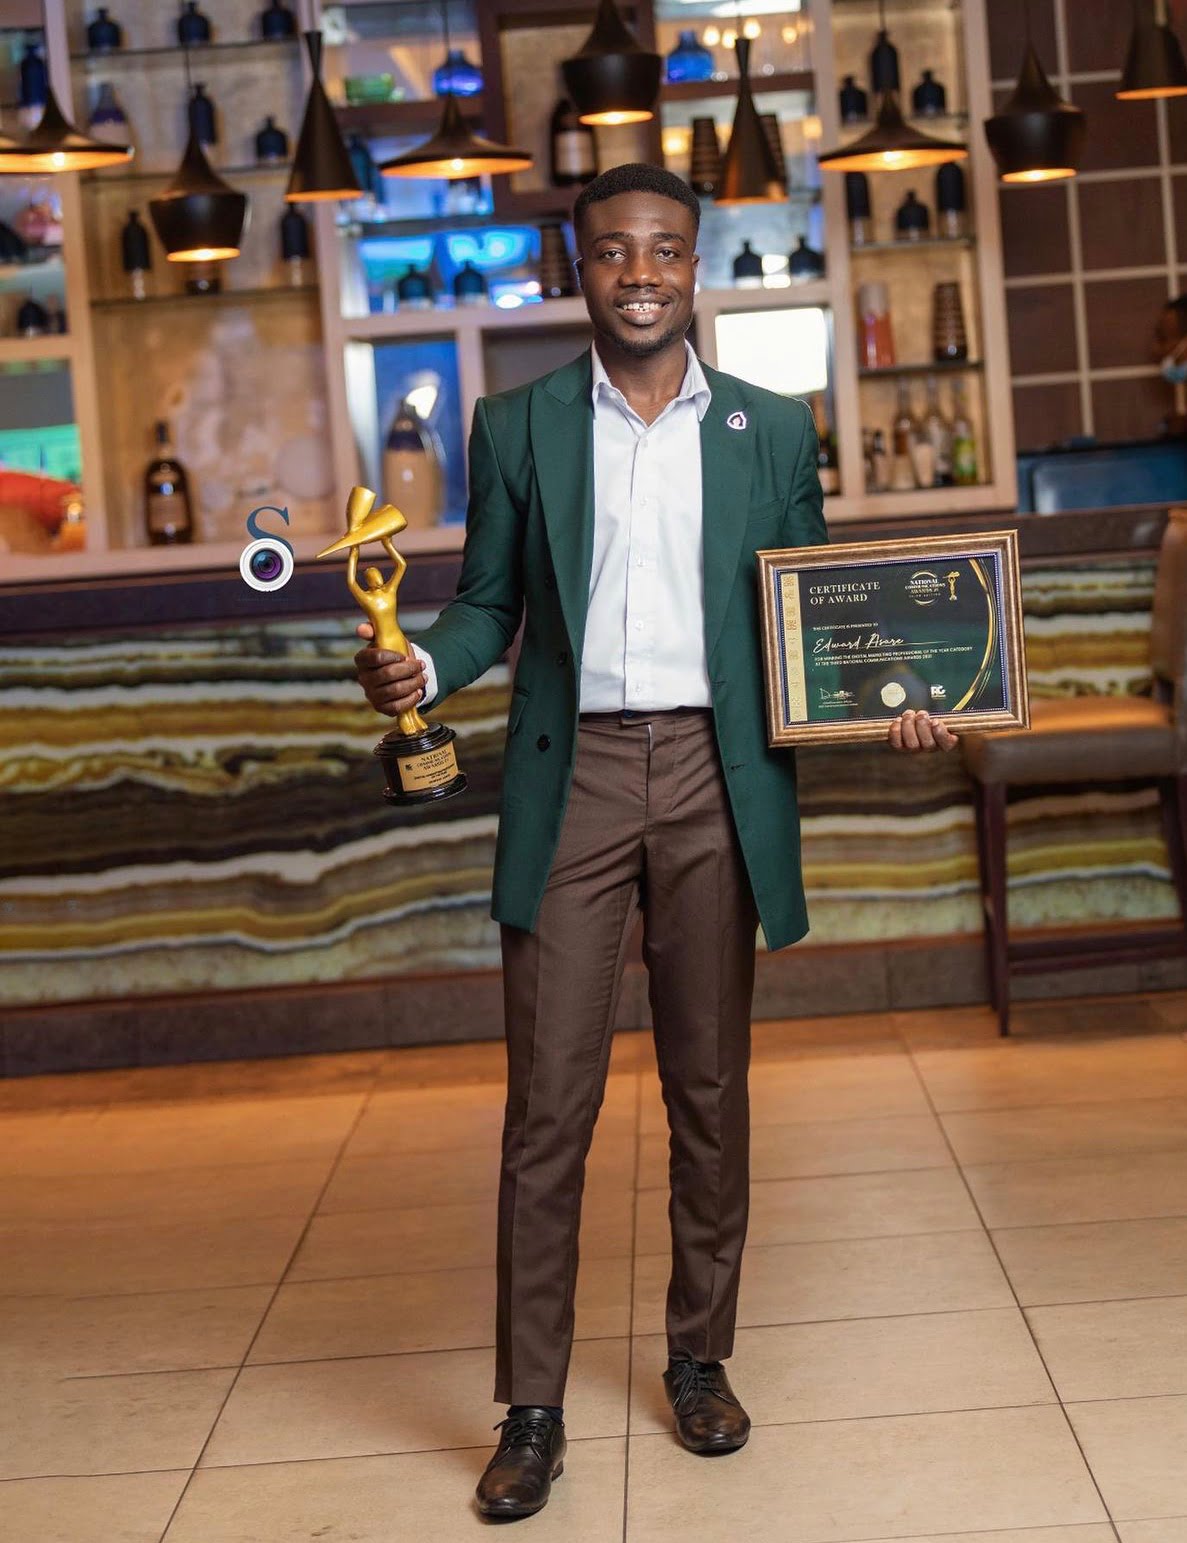 Edward Asare wins Digital Marketing Professional of the Year